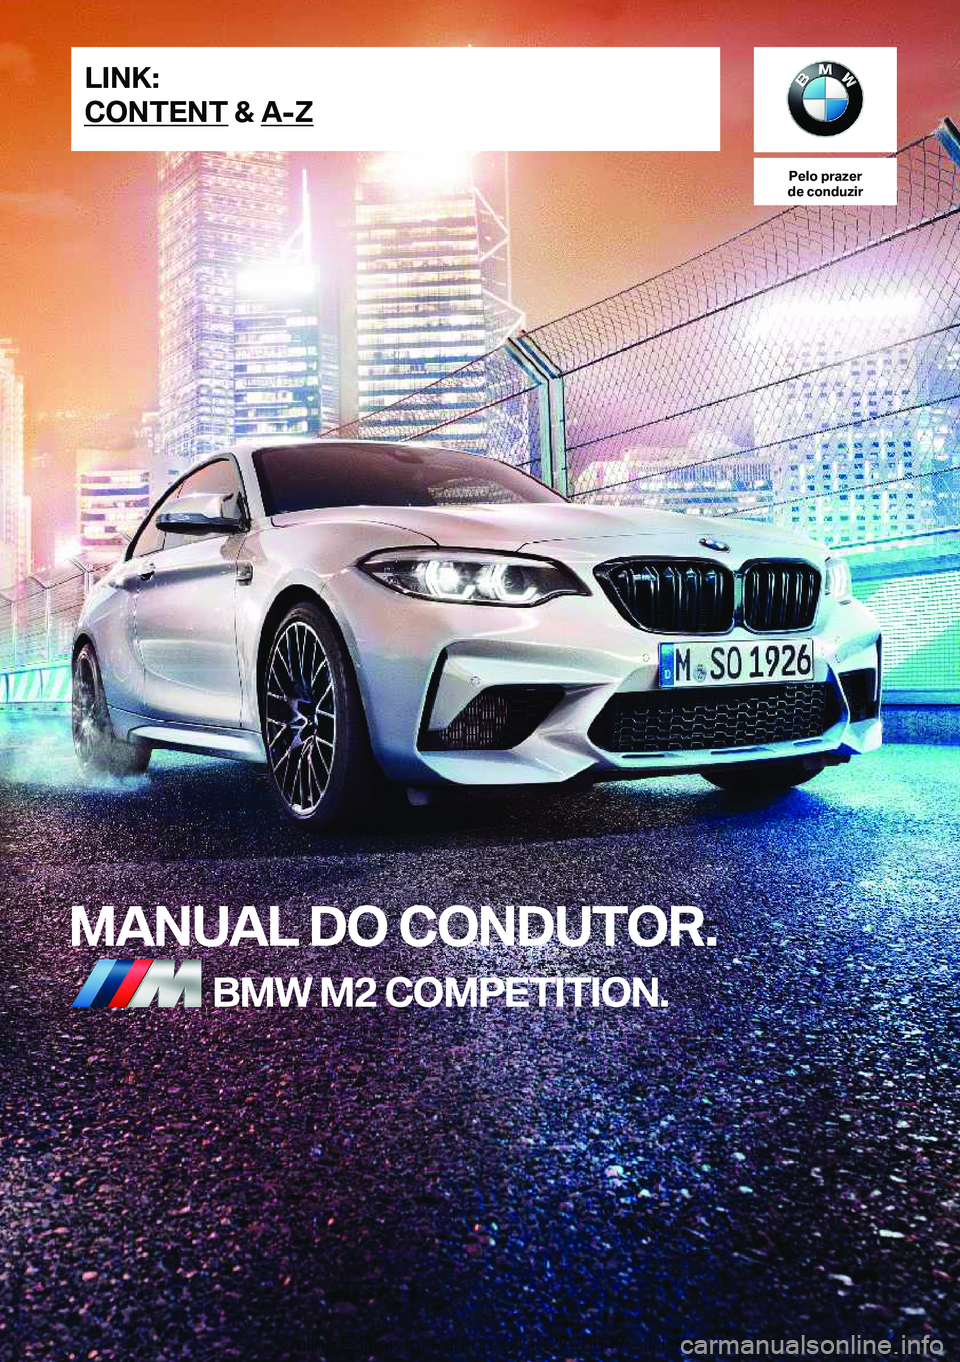 BMW M2 2020  Manual do condutor (in Portuguese) �P�e�l�o��p�r�a�z�e�r
�d�e��c�o�n�d�u�z�i�r
�M�A�N�U�A�L��D�O��C�O�N�D�U�T�O�R�.�B�M�W��M�2��C�O�M�P�E�T�I�T�I�O�N�.�L�I�N�K�:
�C�O�N�T�E�N�T��&��A�-�;�O�n�l�i�n�e��E�d�i�t�i�o�n��f�o�r��P�